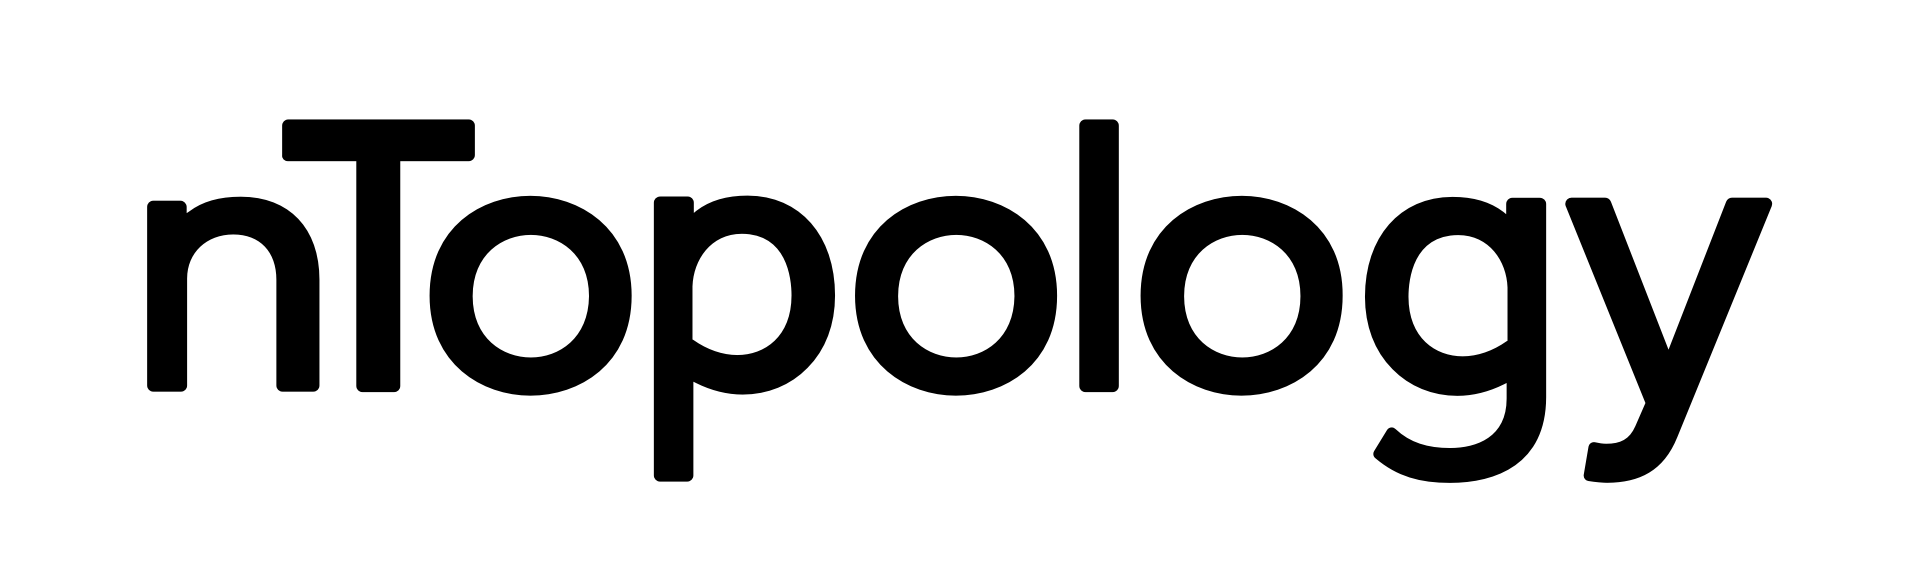 ntopology logo black